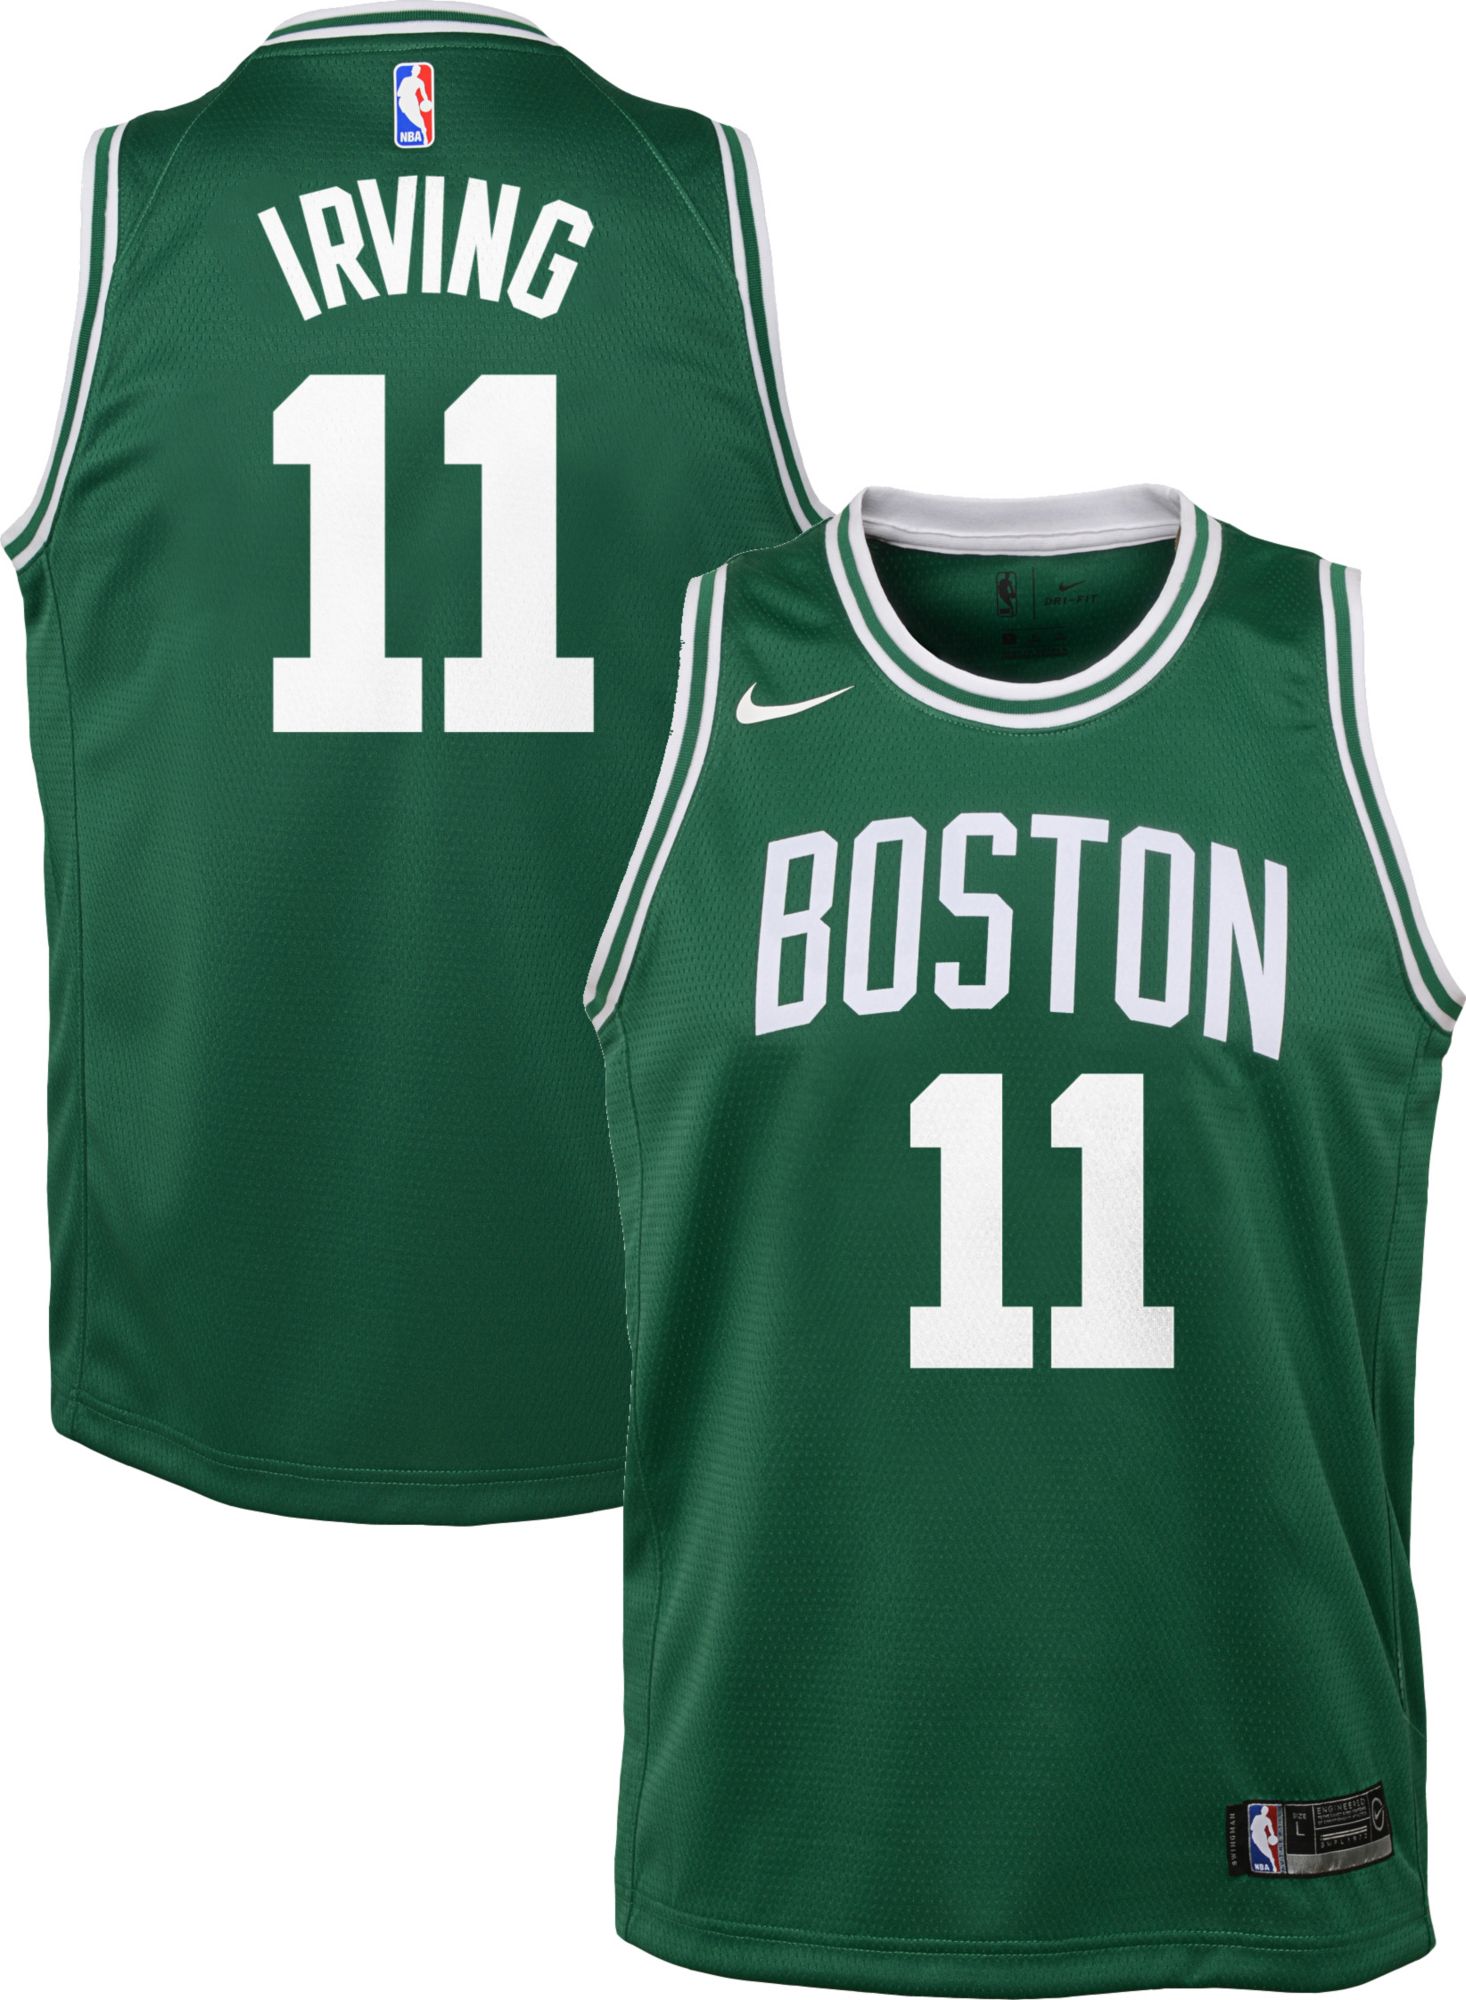 order boston celtics old school jersey 28d08 0bdb31466 x 2000